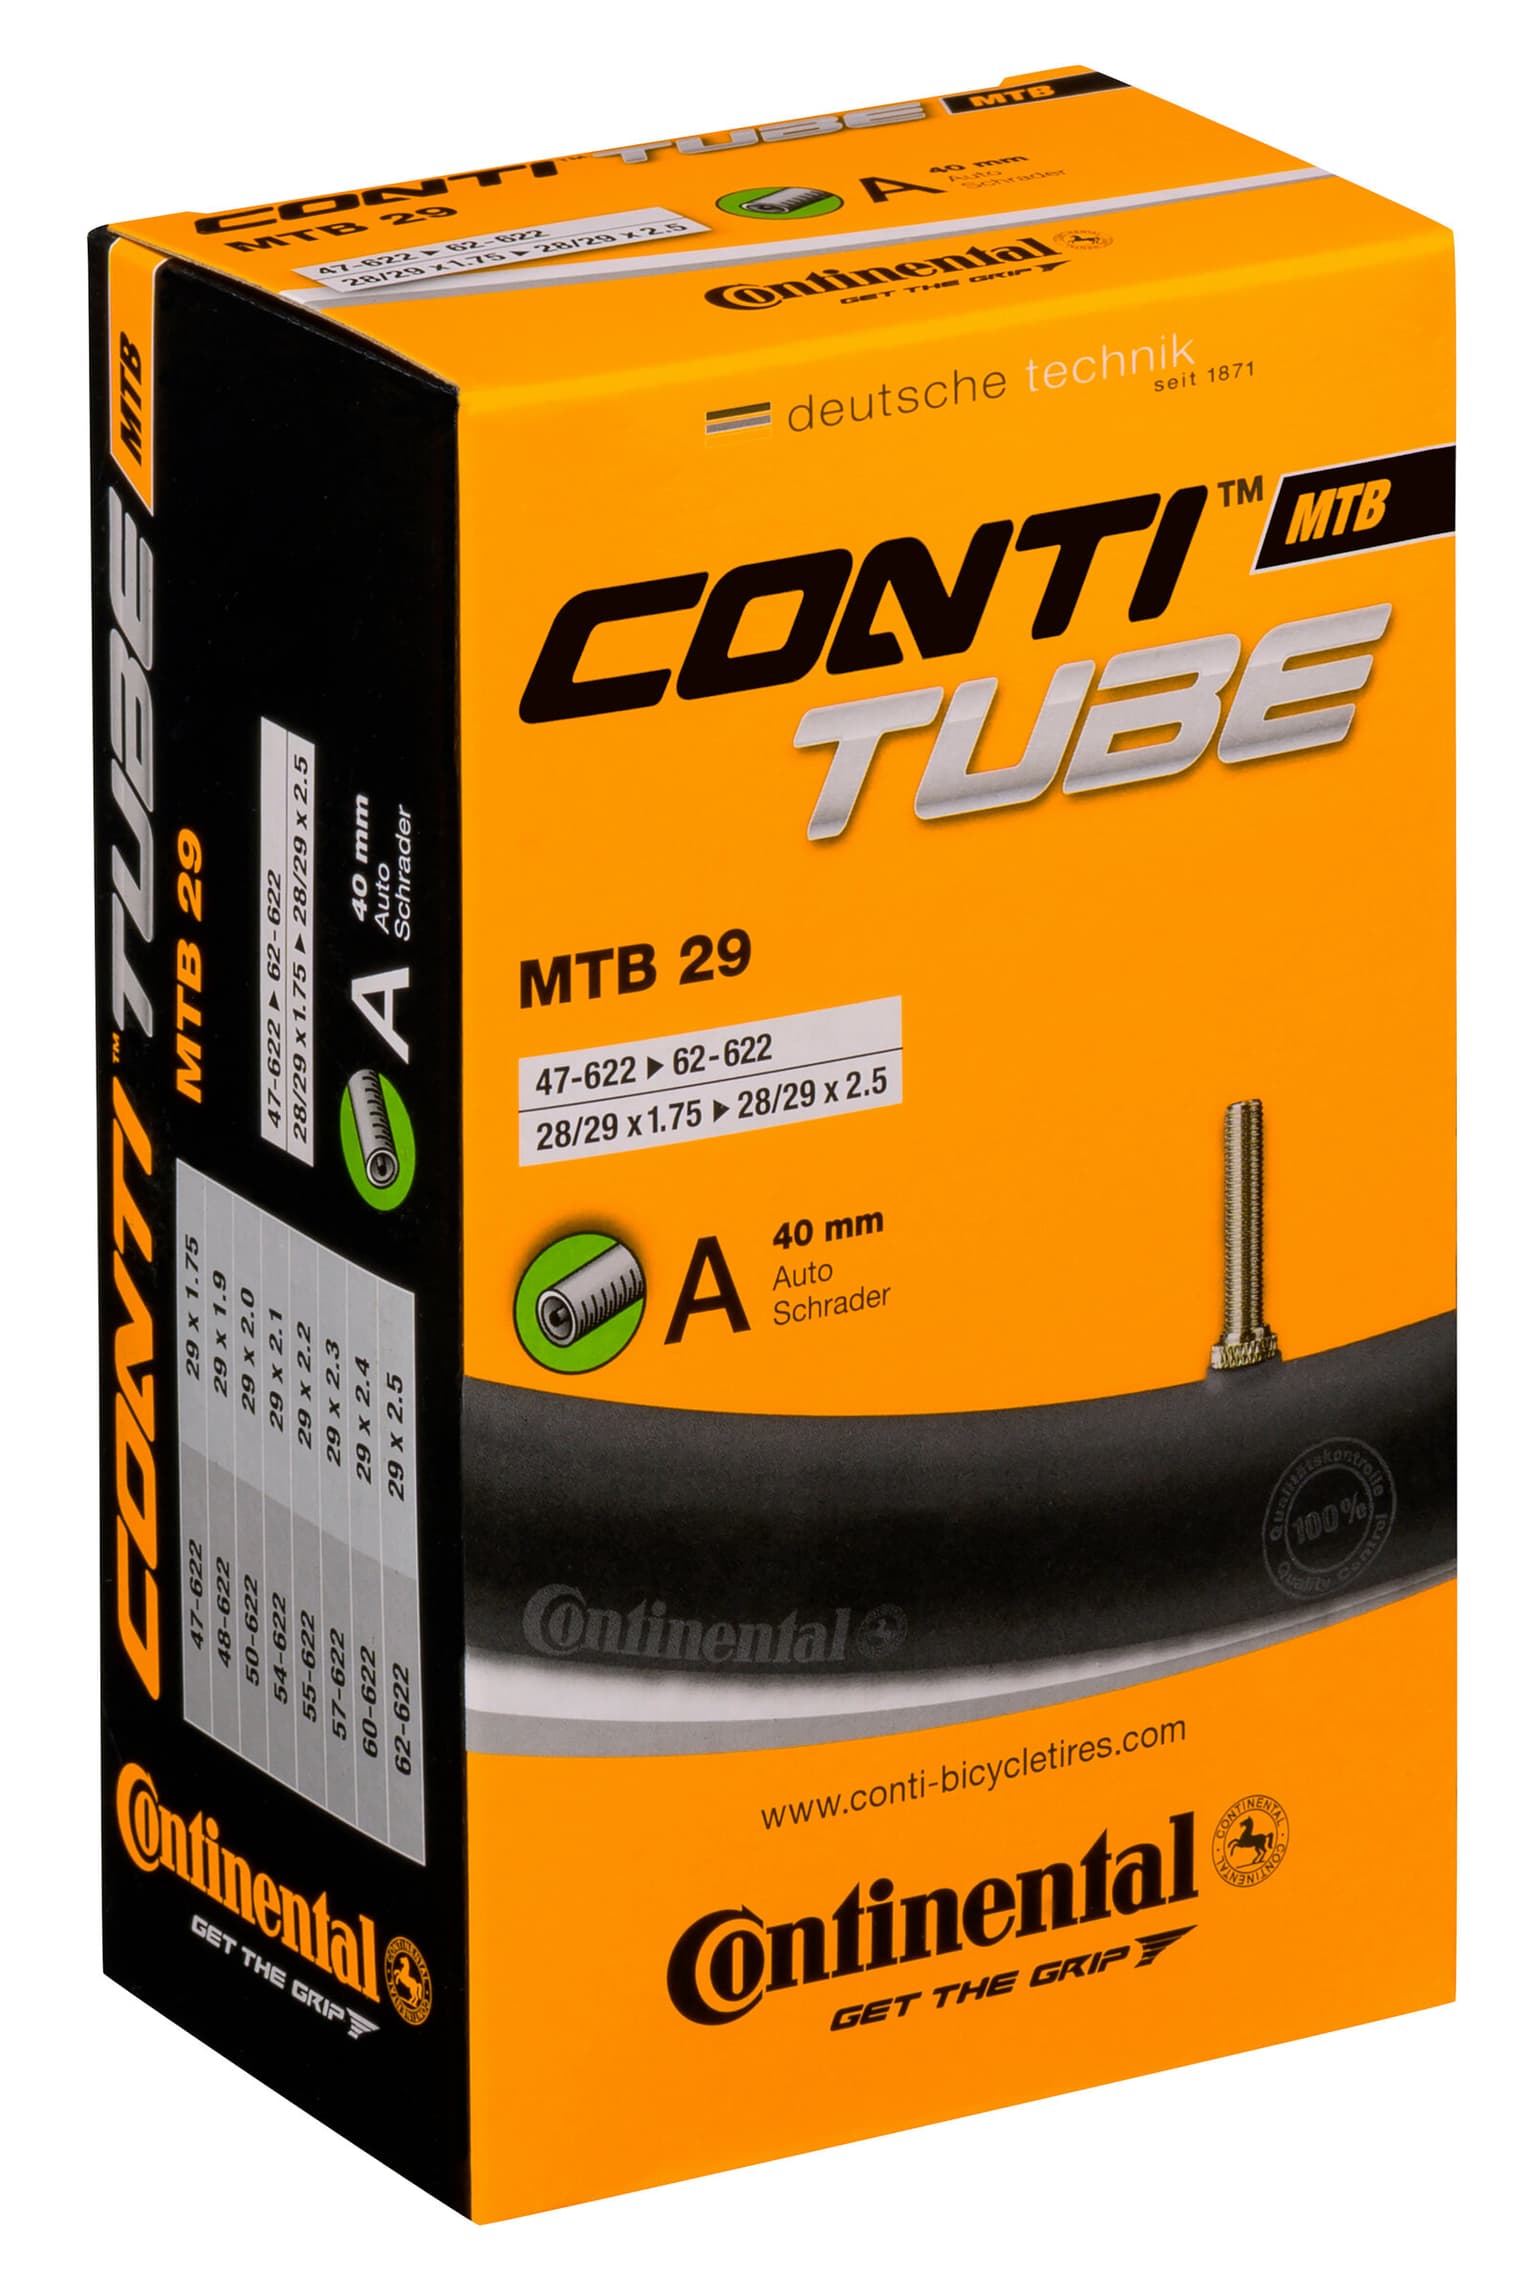 Continental Continental Conti MTB 29 A40 Chambre à air pour vélo 1